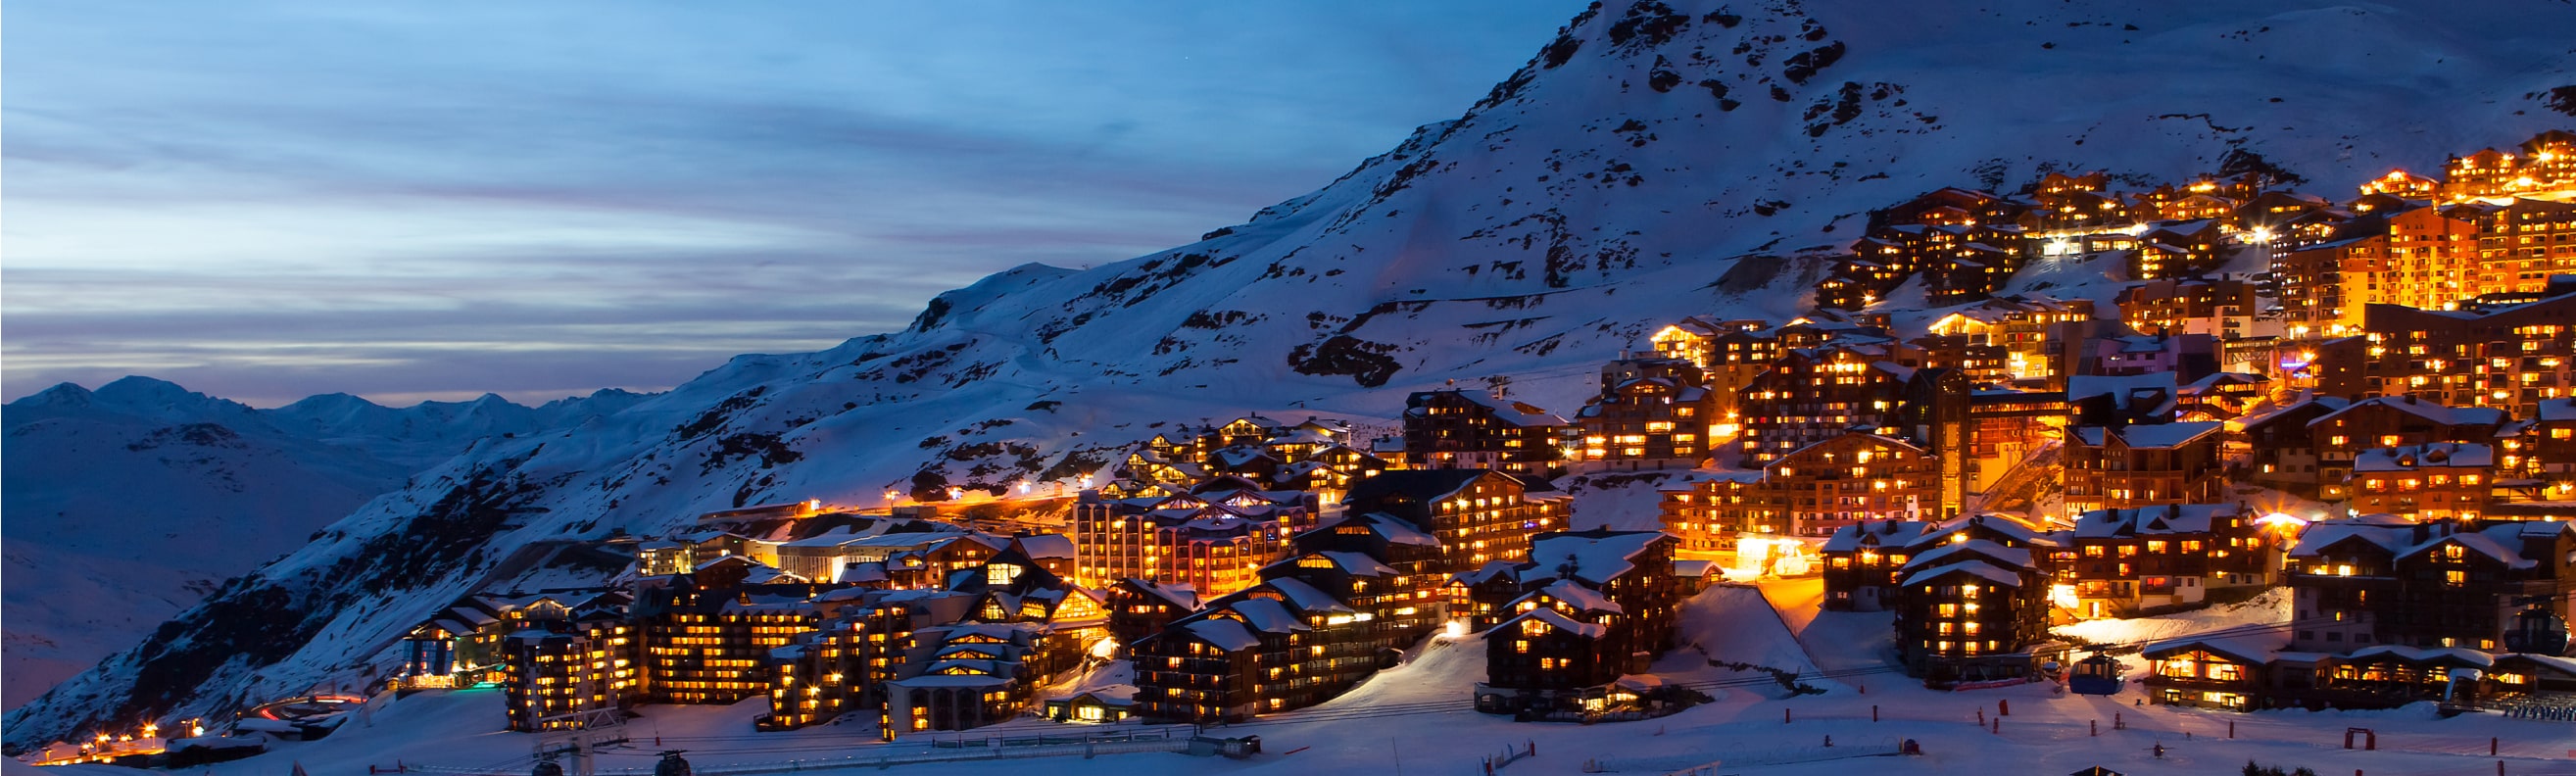 The Ski Area of Val Thorens : Skiers' Paradise